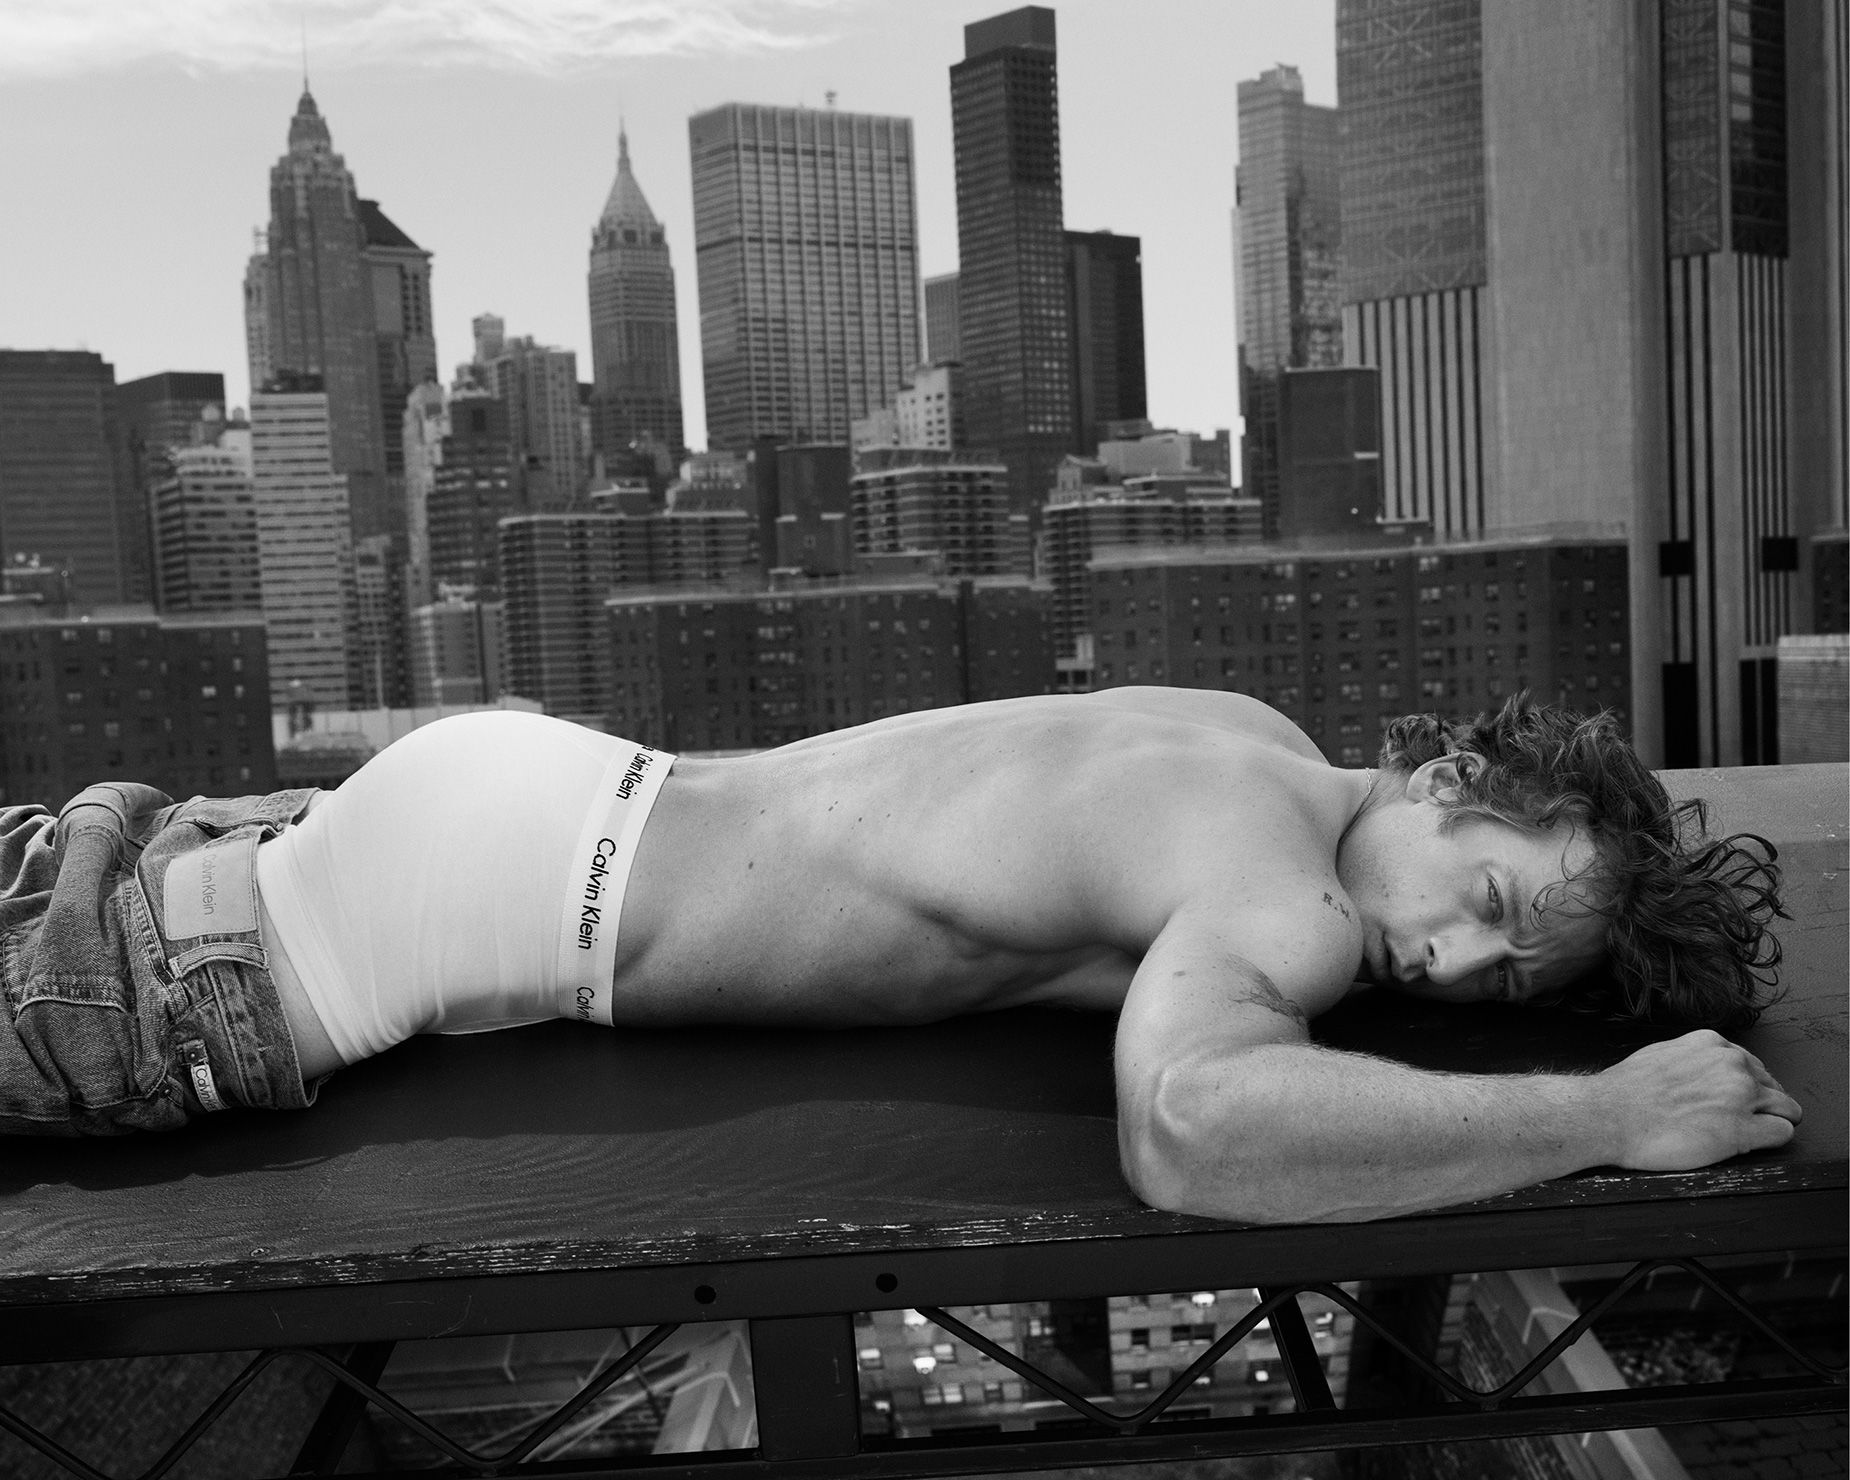 Jeremy Allen White's Underwear Campaign Generates $12.7 Million in Media  Exposure for Calvin Klein in 48 Hours